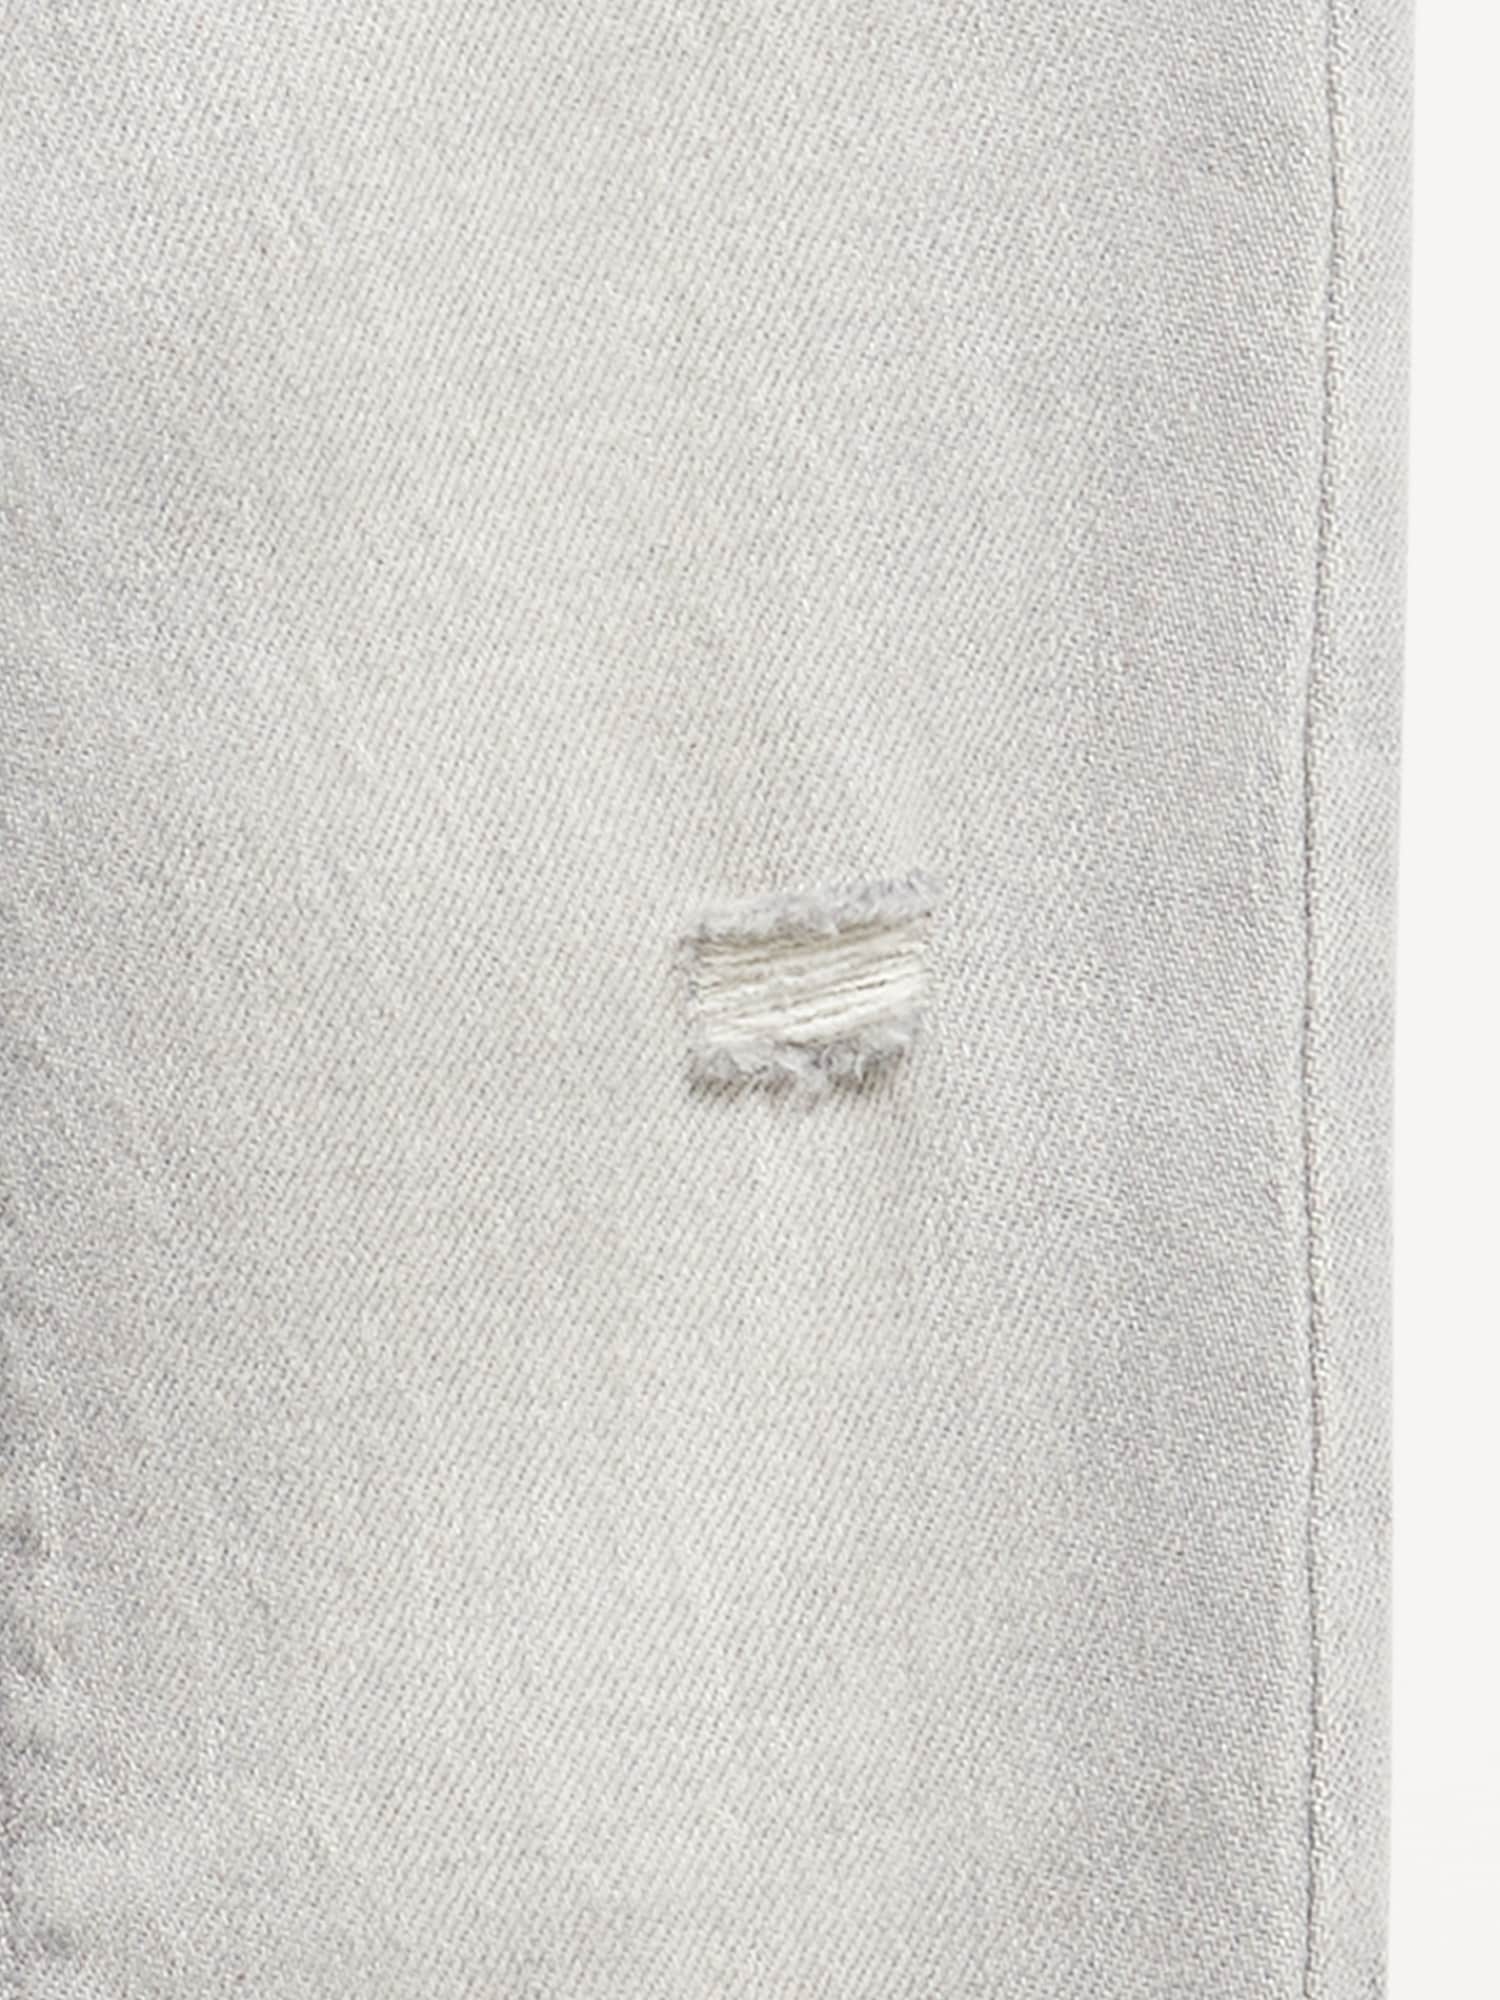 Cotton Denim - 3 Colors Available — Fabric Sight